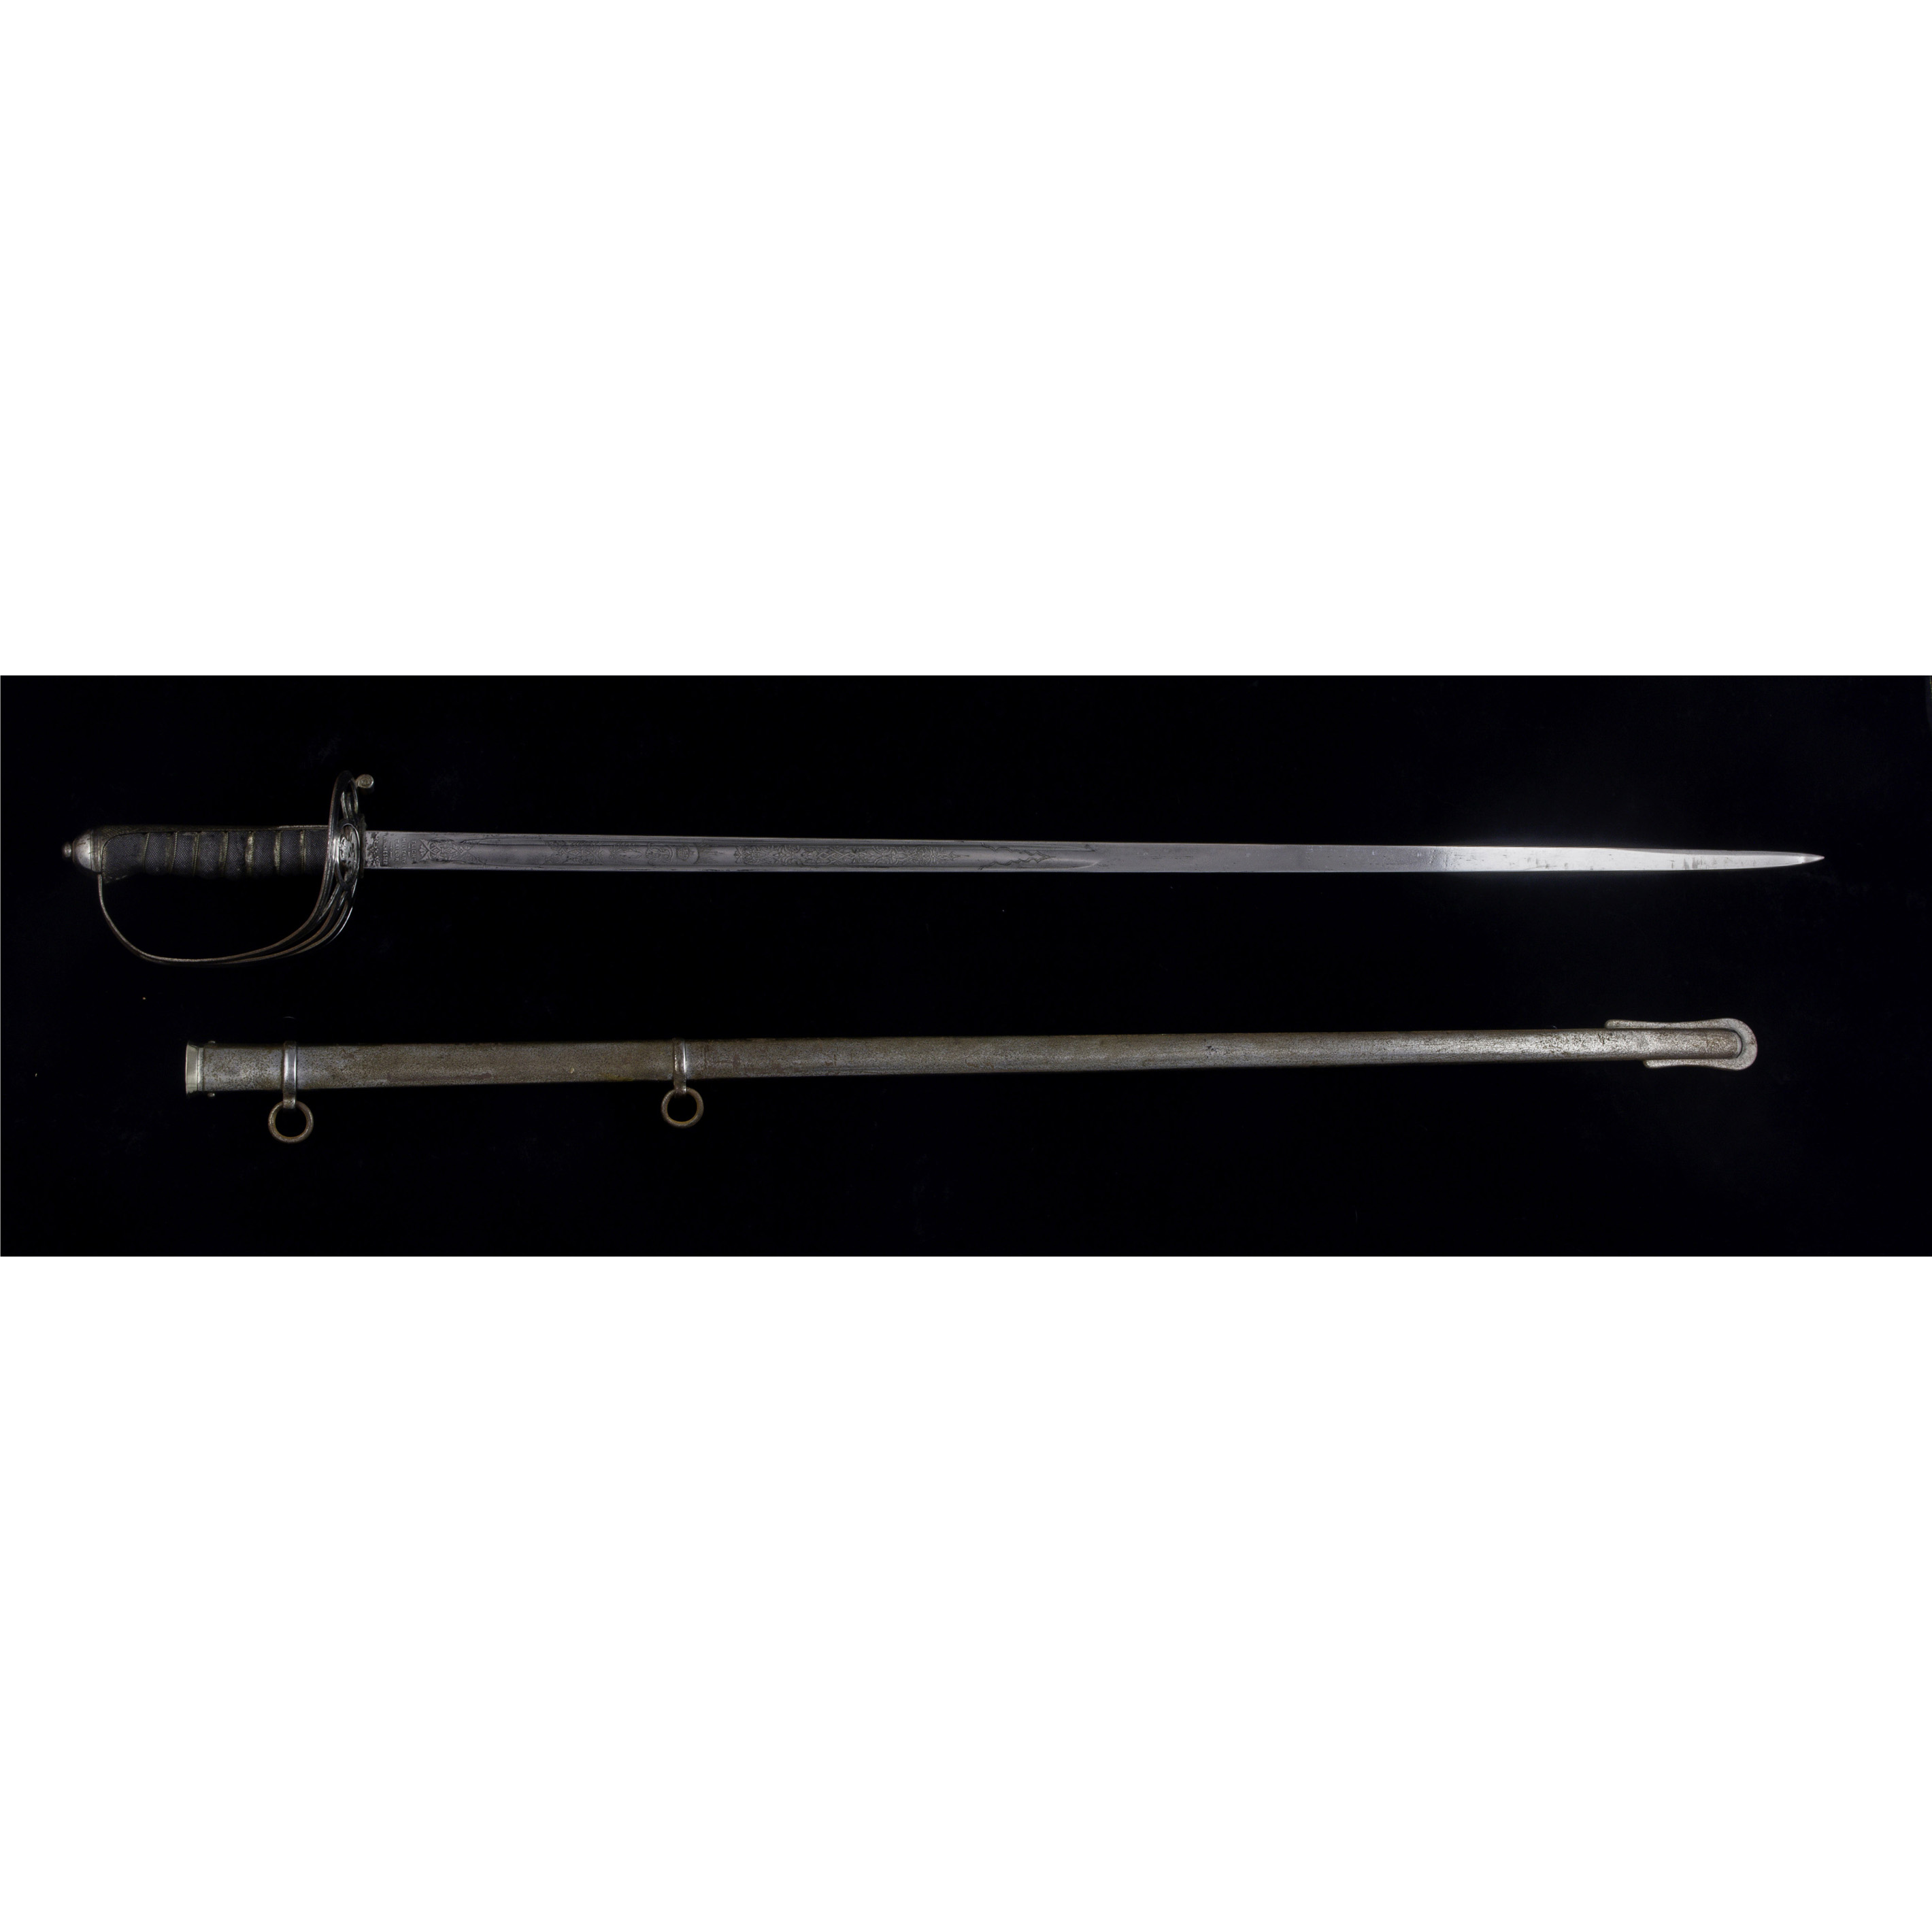 AN EDWARD VII STEEL INFANTRY SWORD